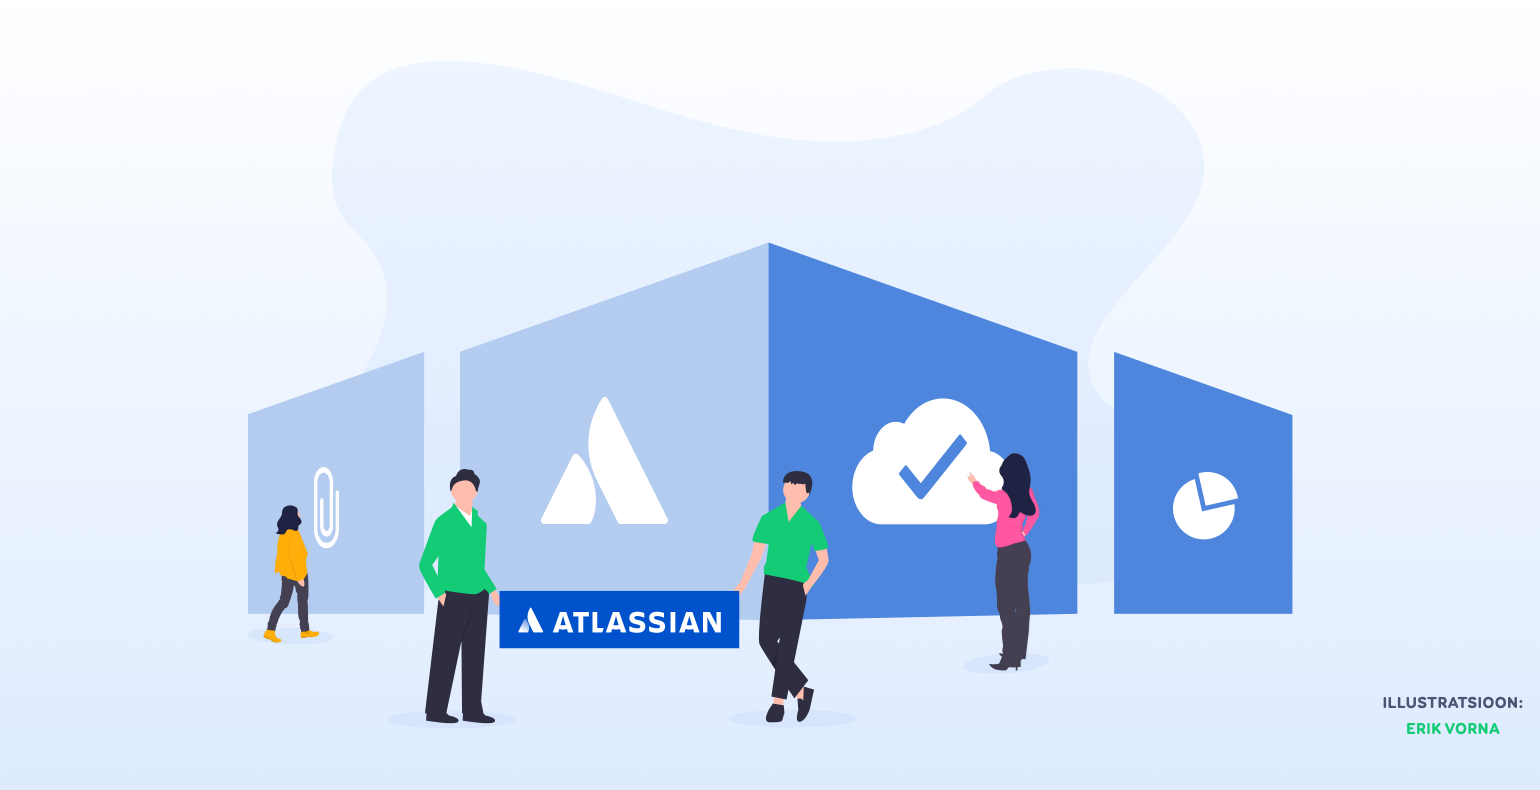 Inimesed Atlassiani logoga elementide ees seismas